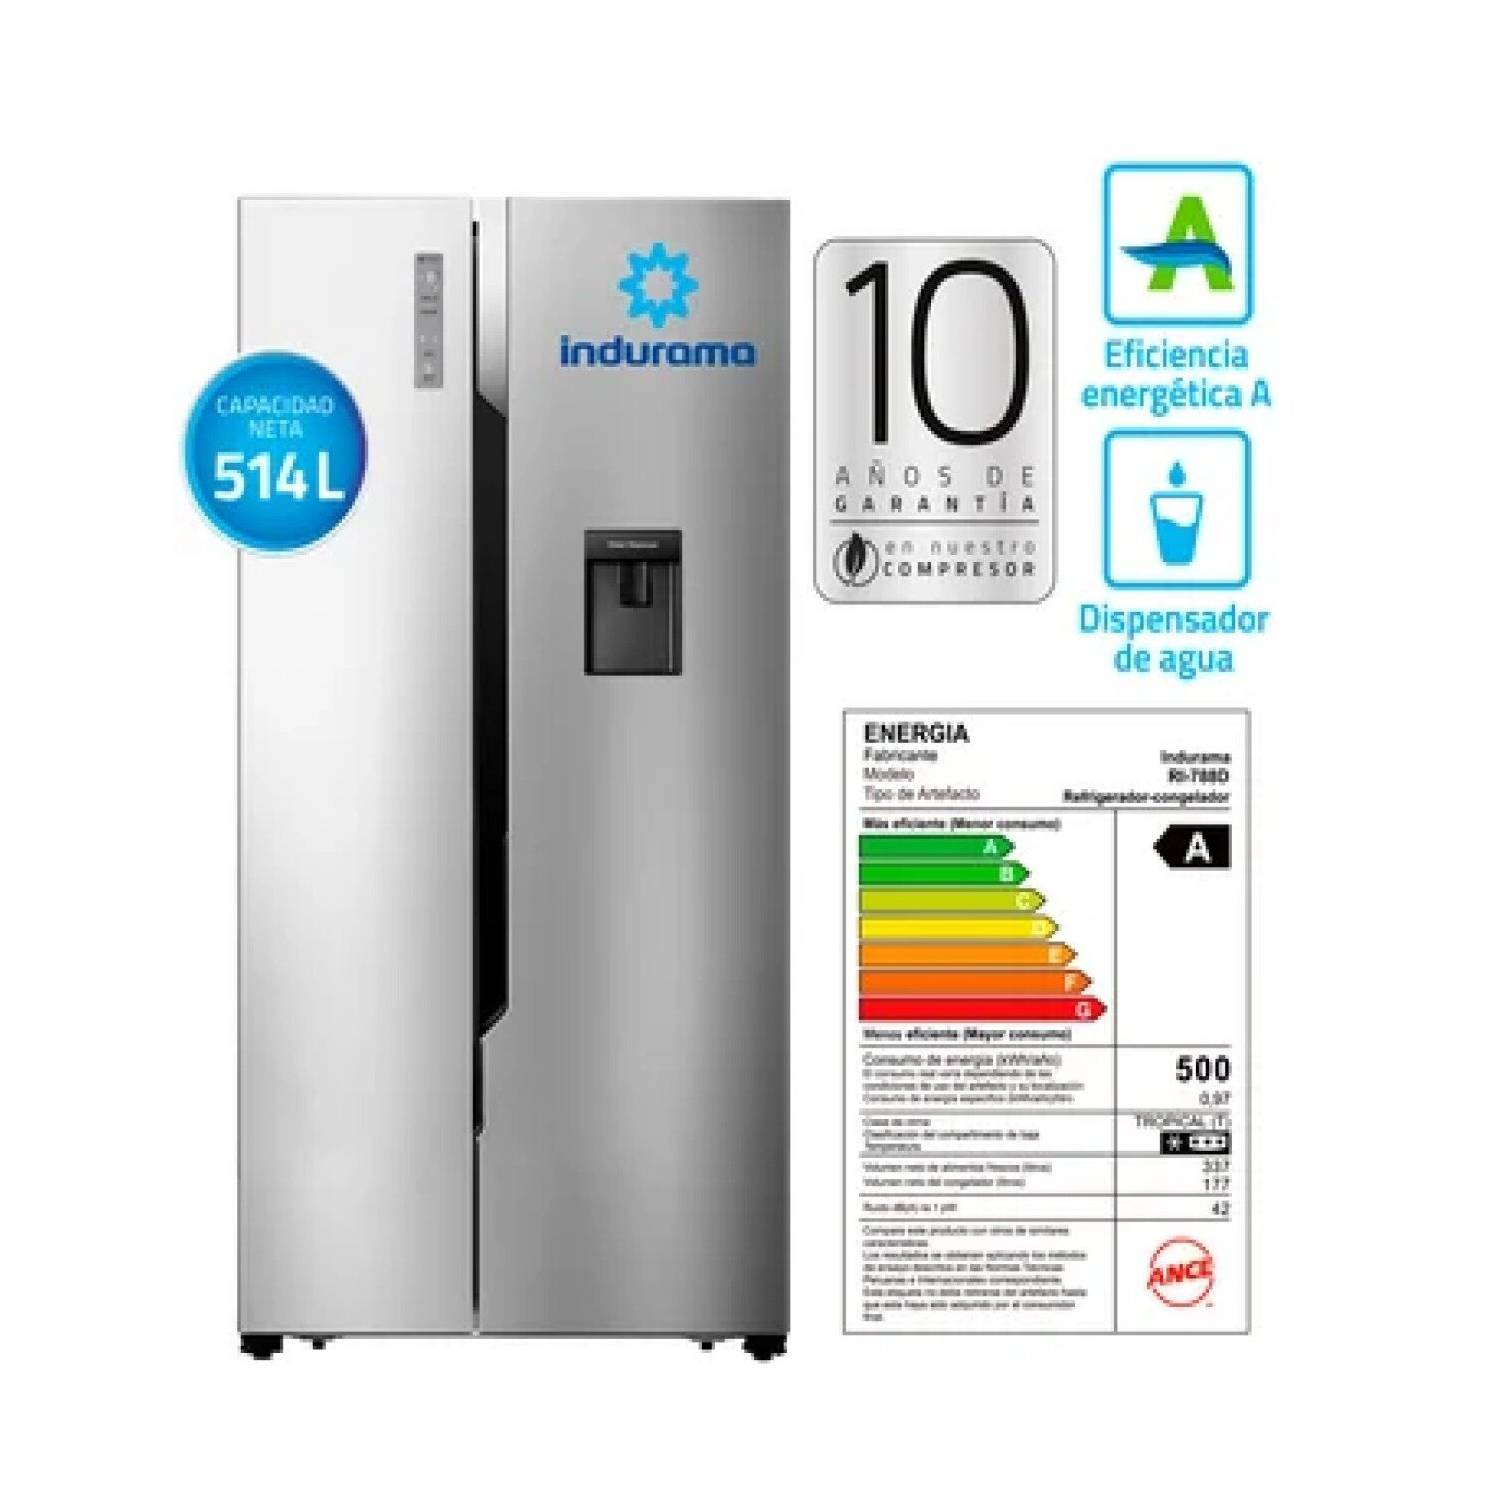 Refrigeradora indurama RI-788D no frost 514 litros